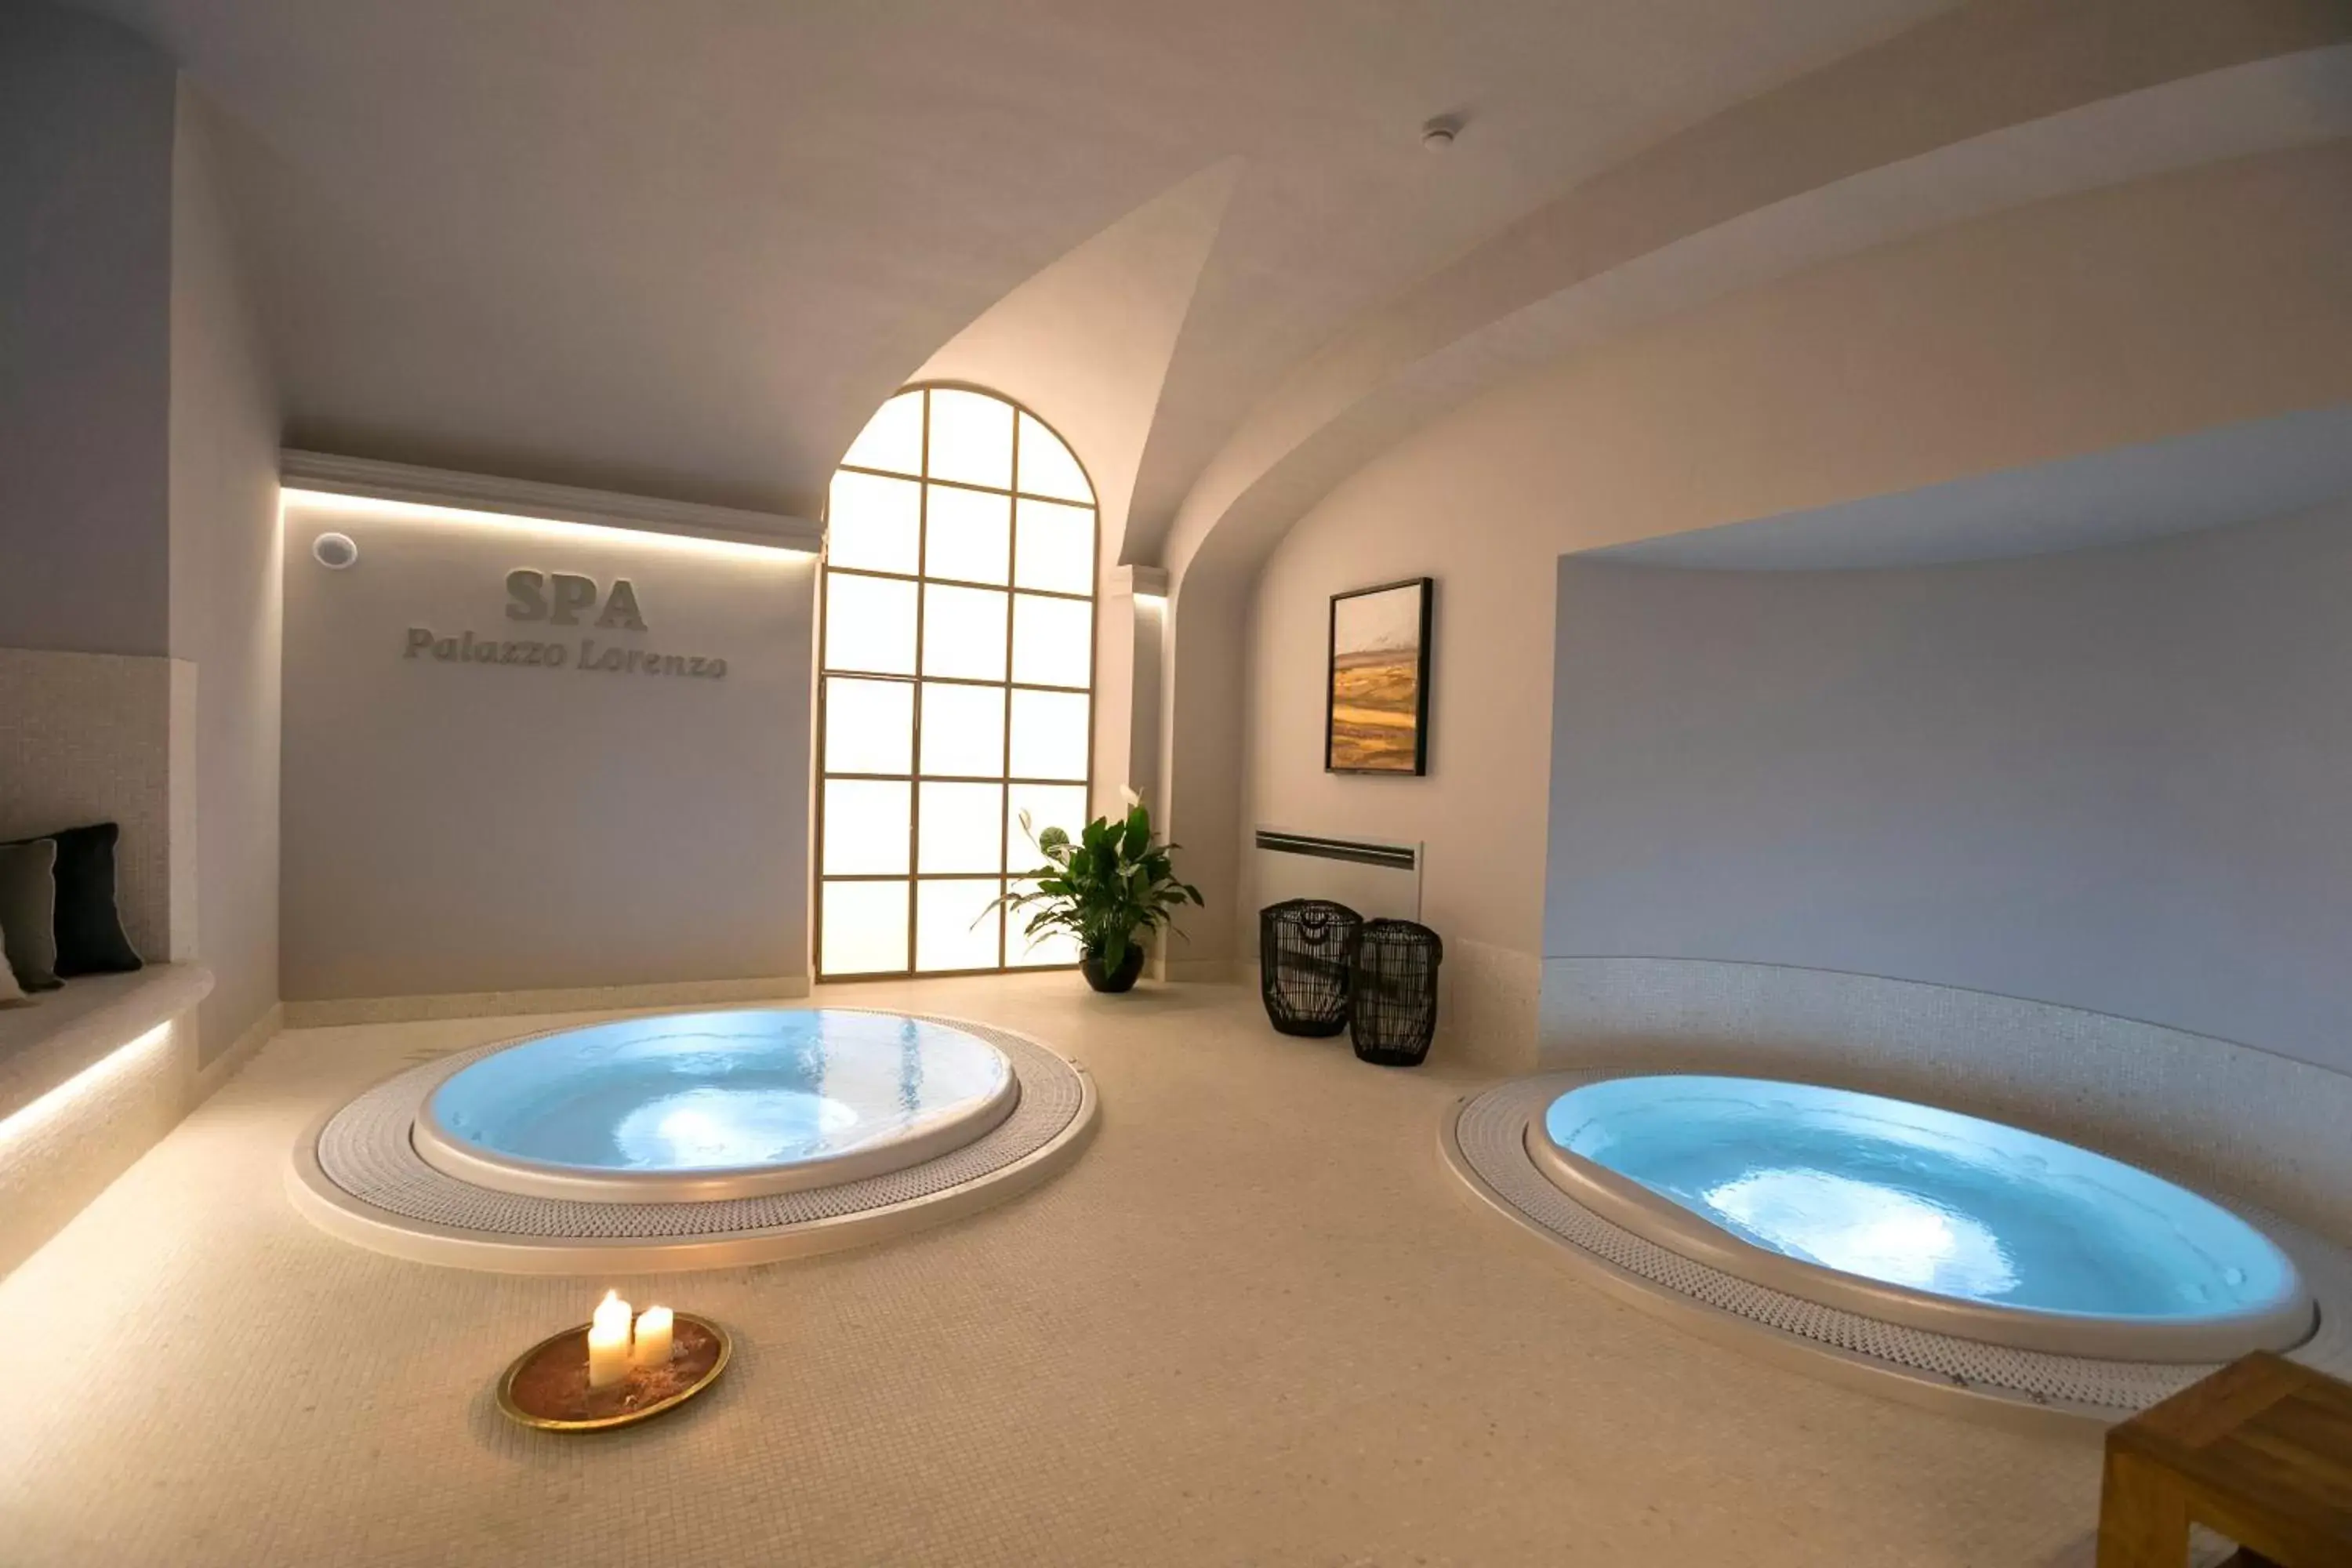 Spa and wellness centre/facilities, Bathroom in Palazzo Lorenzo Hotel Boutique & Spa